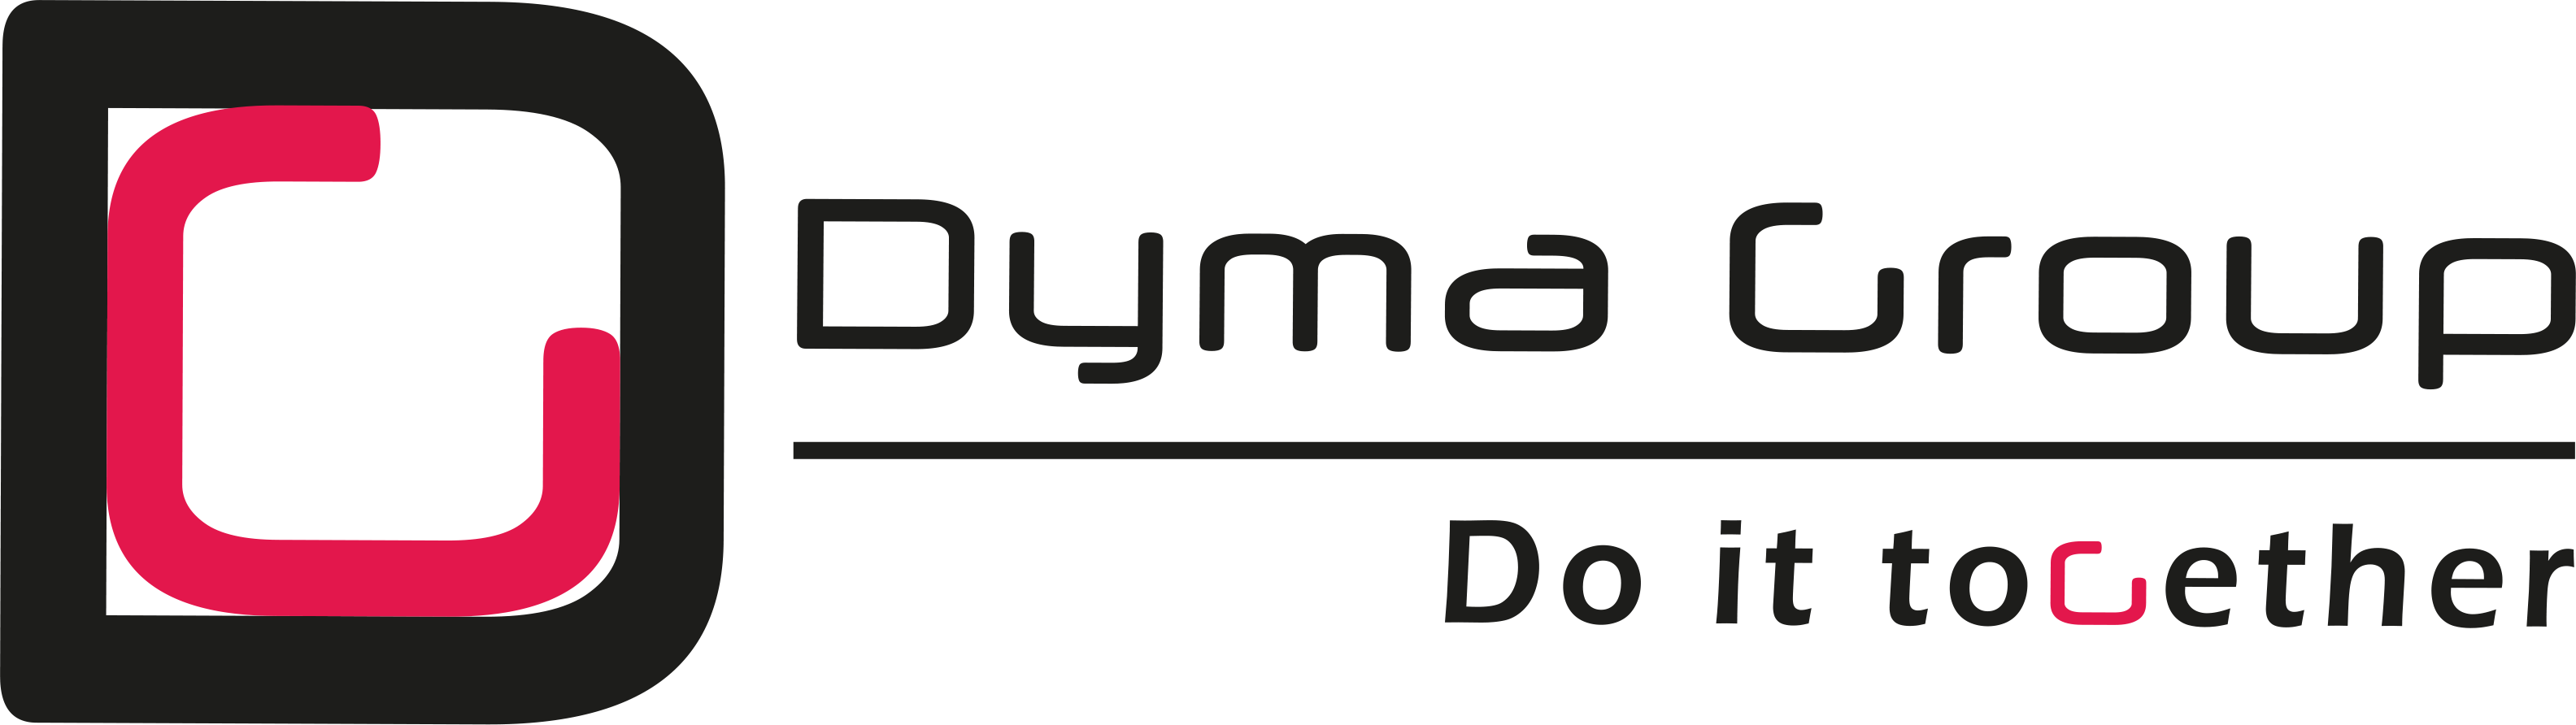 Dyma Group